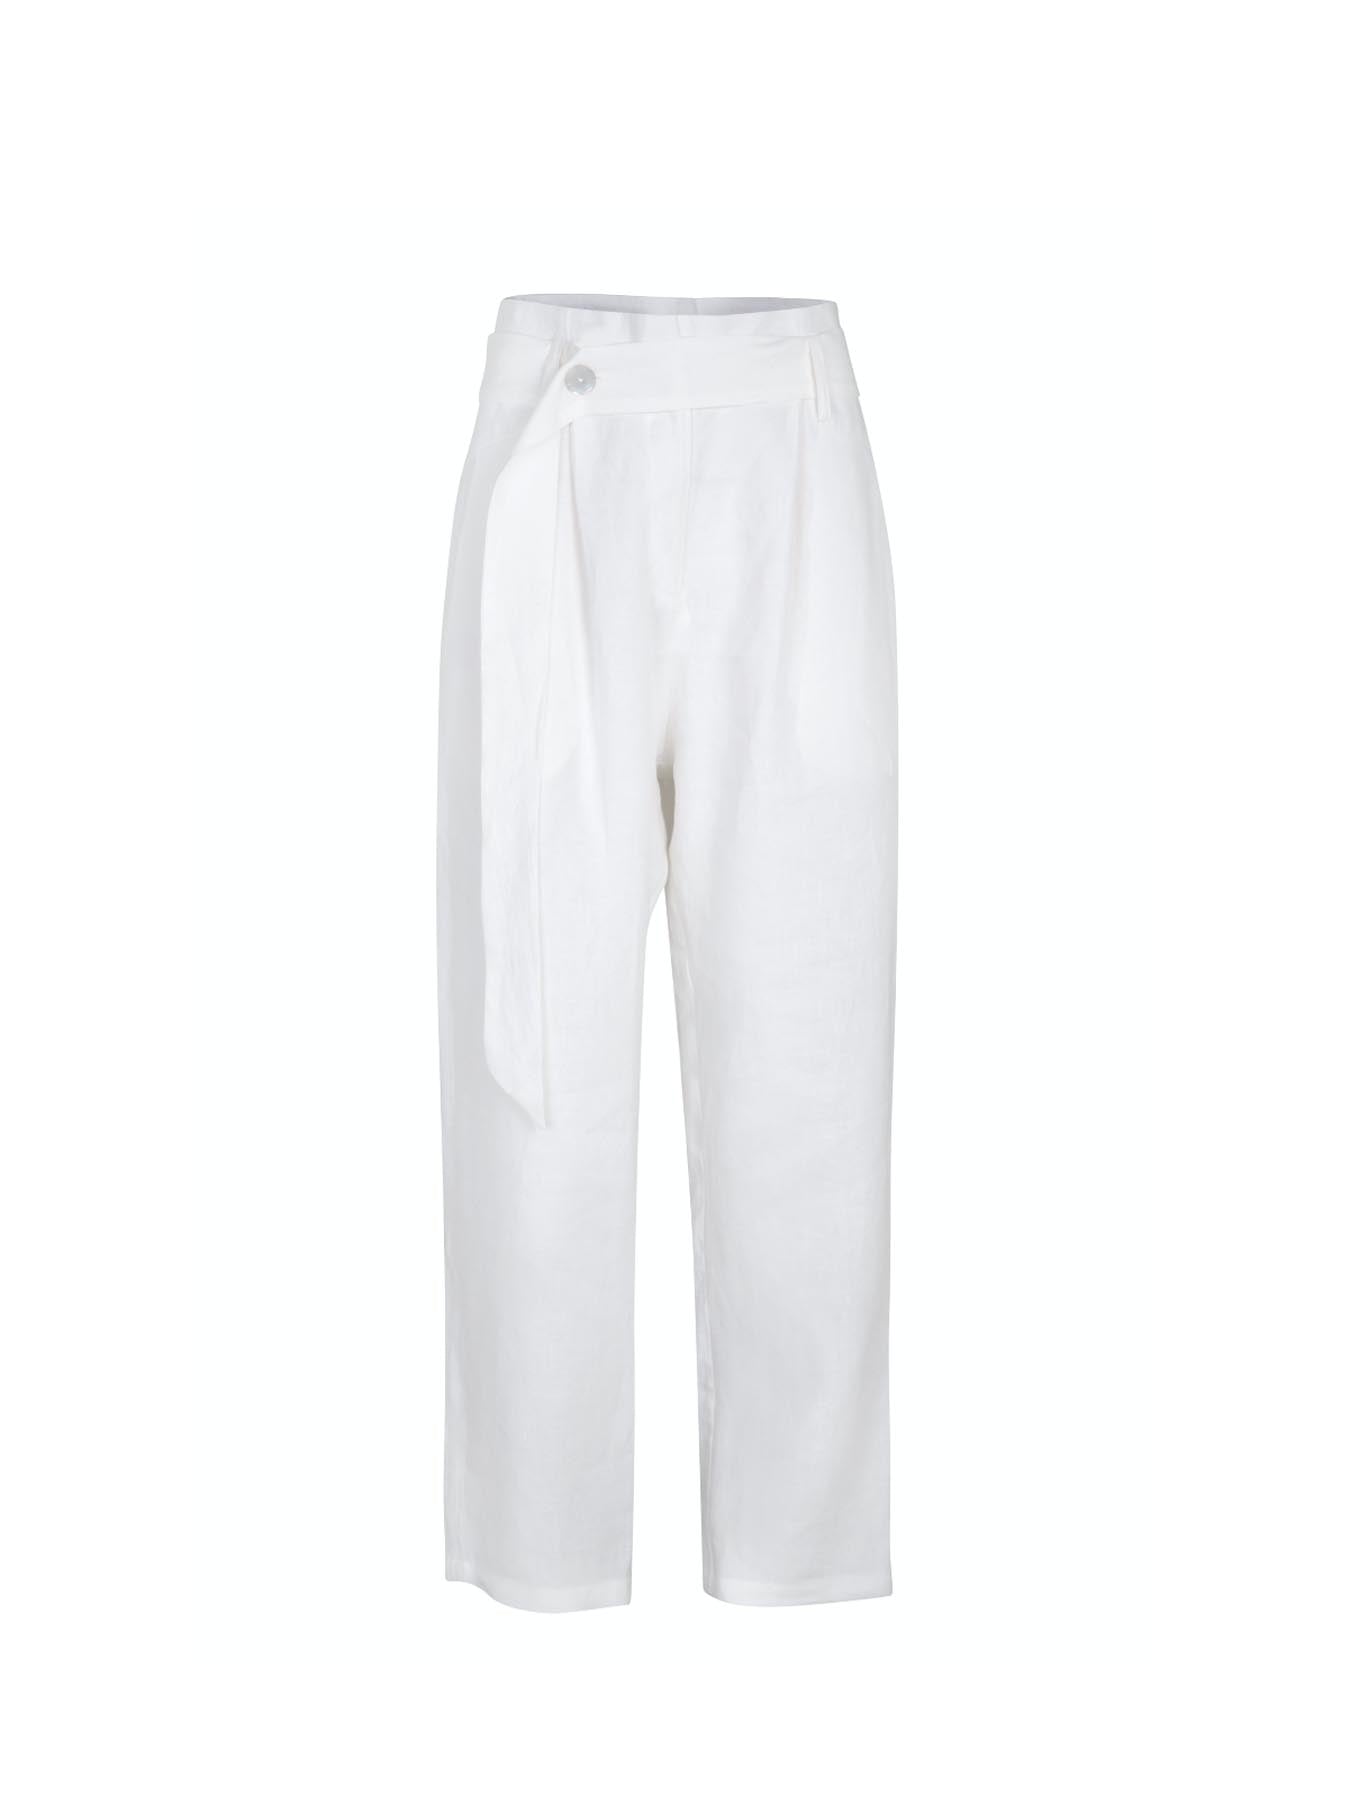 Buy Clare & Clara White Slim Fit Regular Formal Trouser (44) at Amazon.in